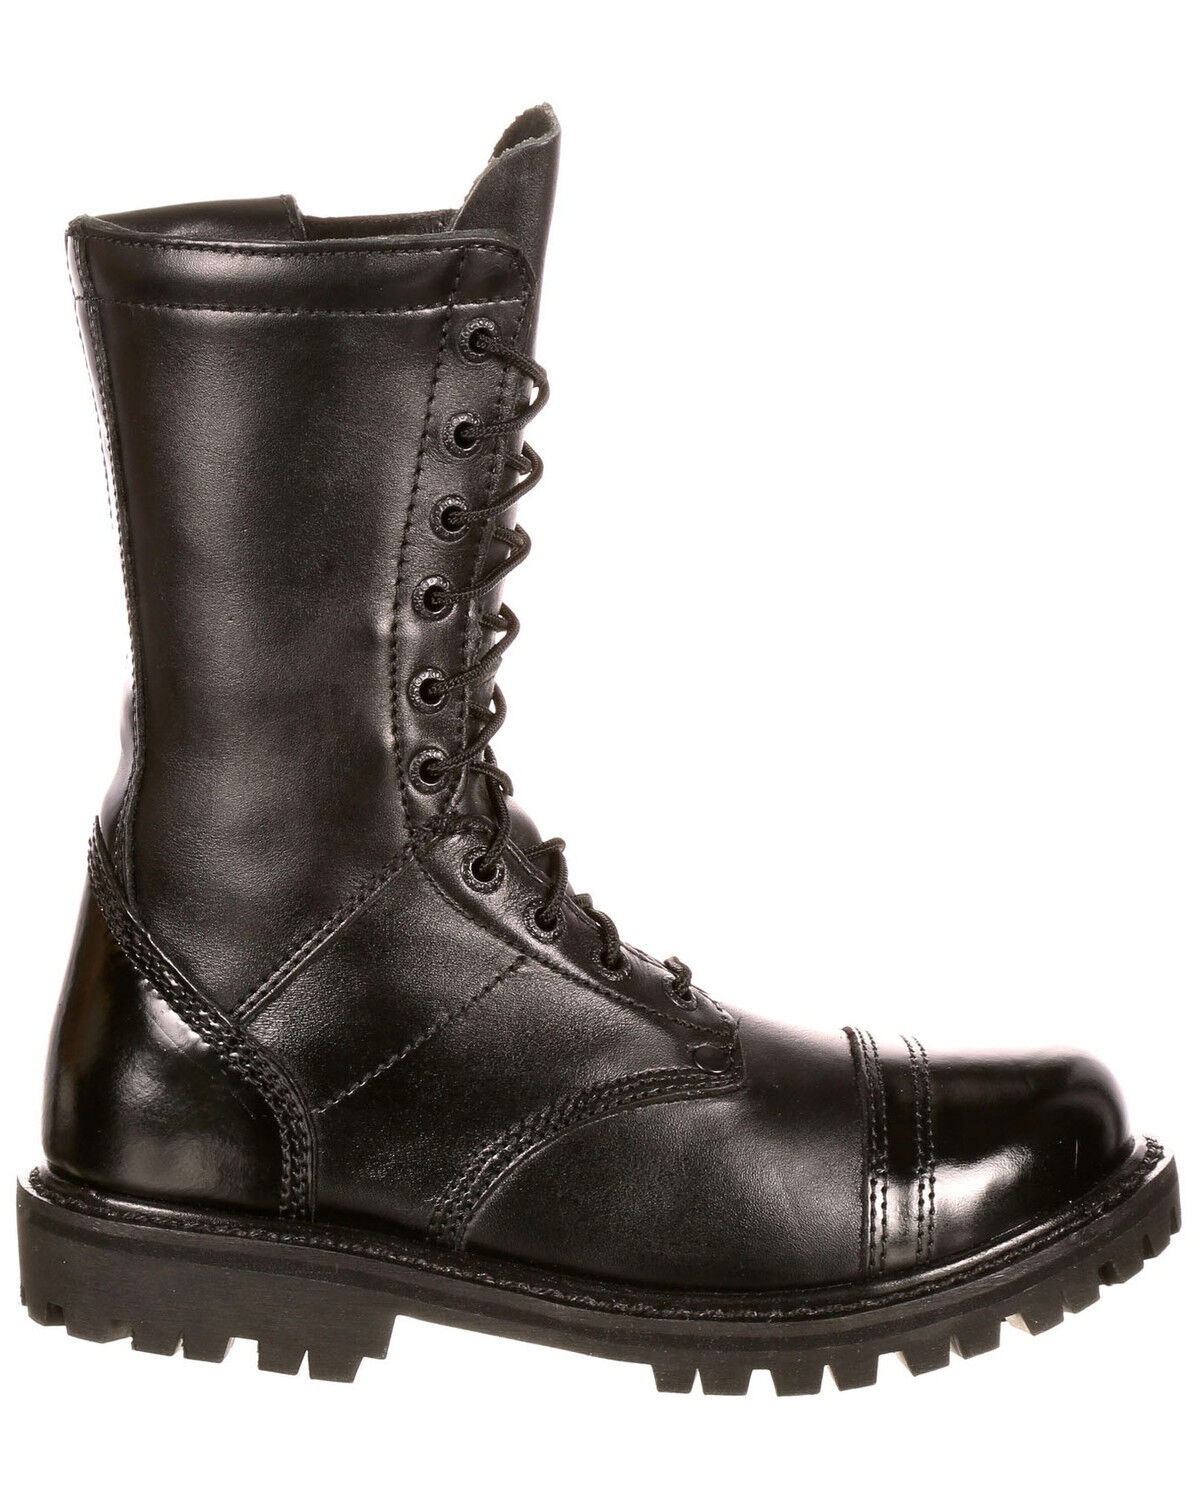 women's work boots with zipper